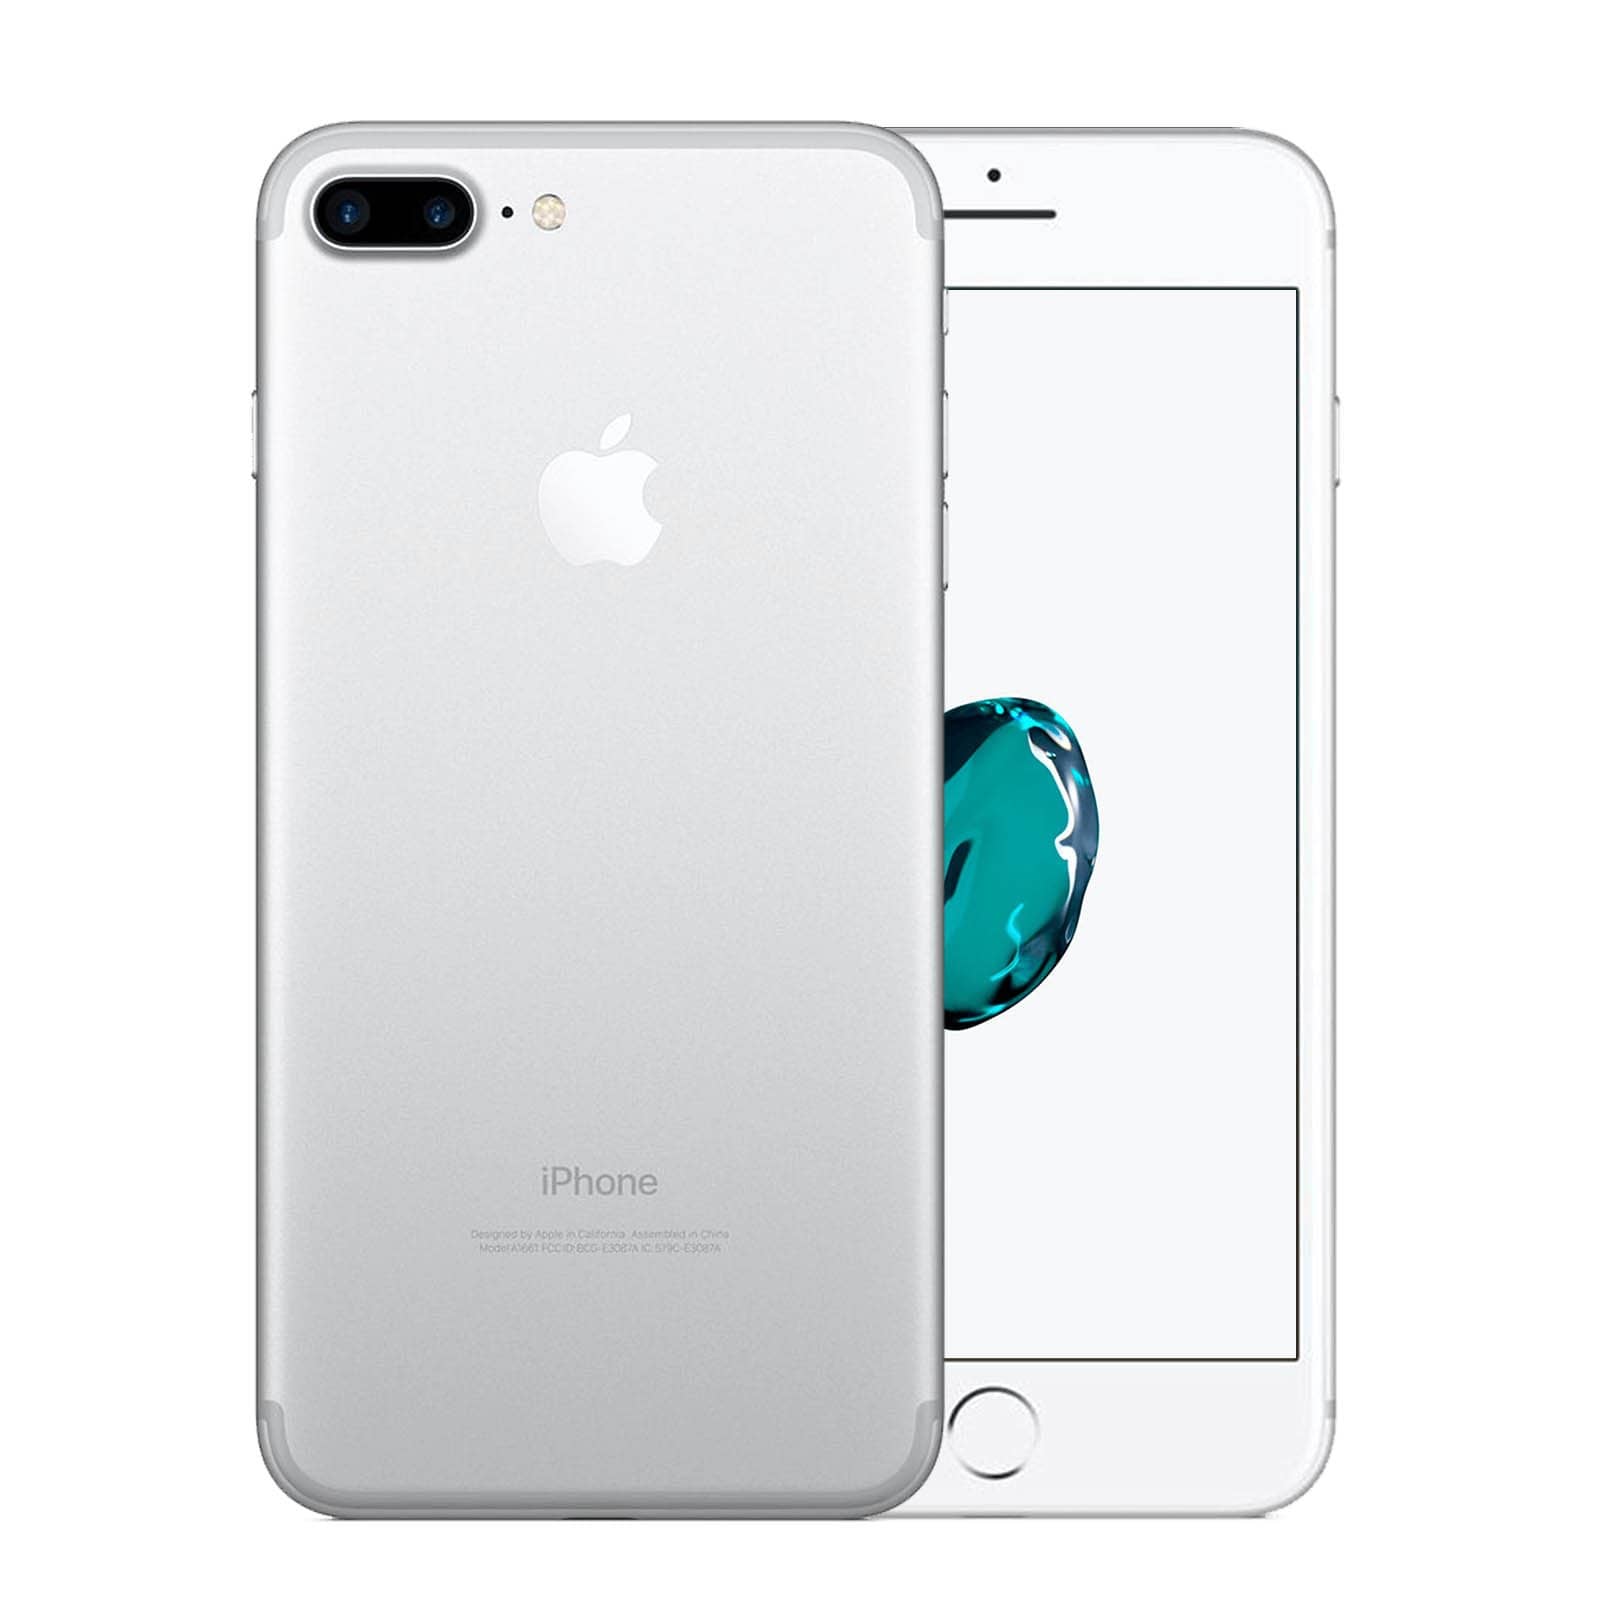 Apple iPhone 7 Plus 32GB Silver Good - Unlocked 32GB Silver Good